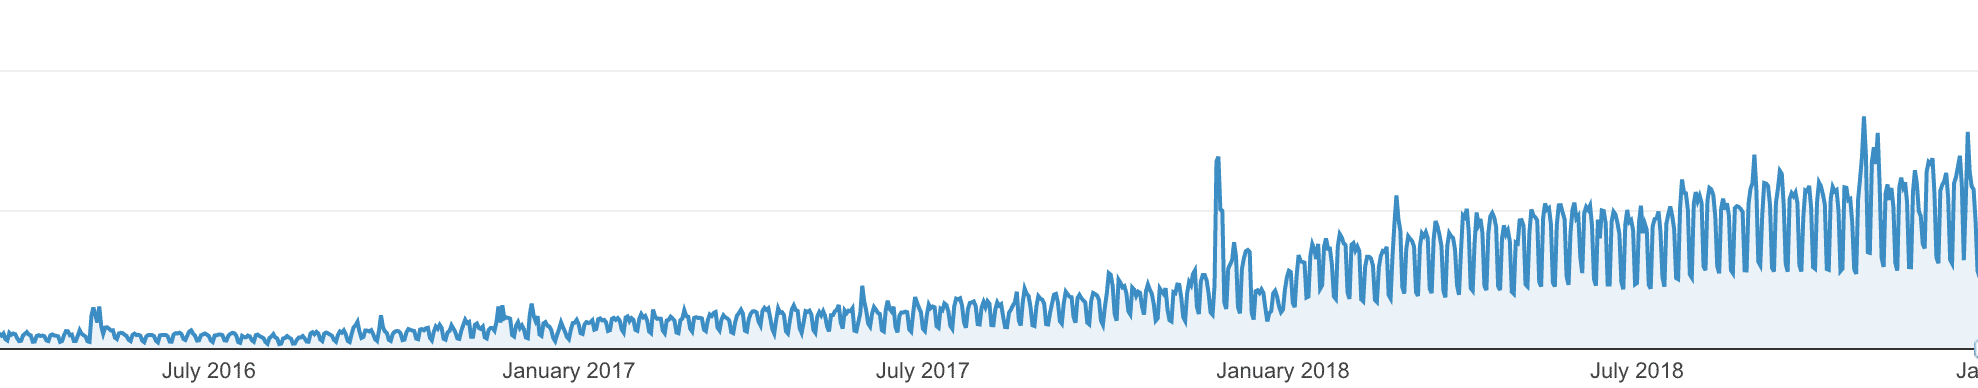 Website traffic growth